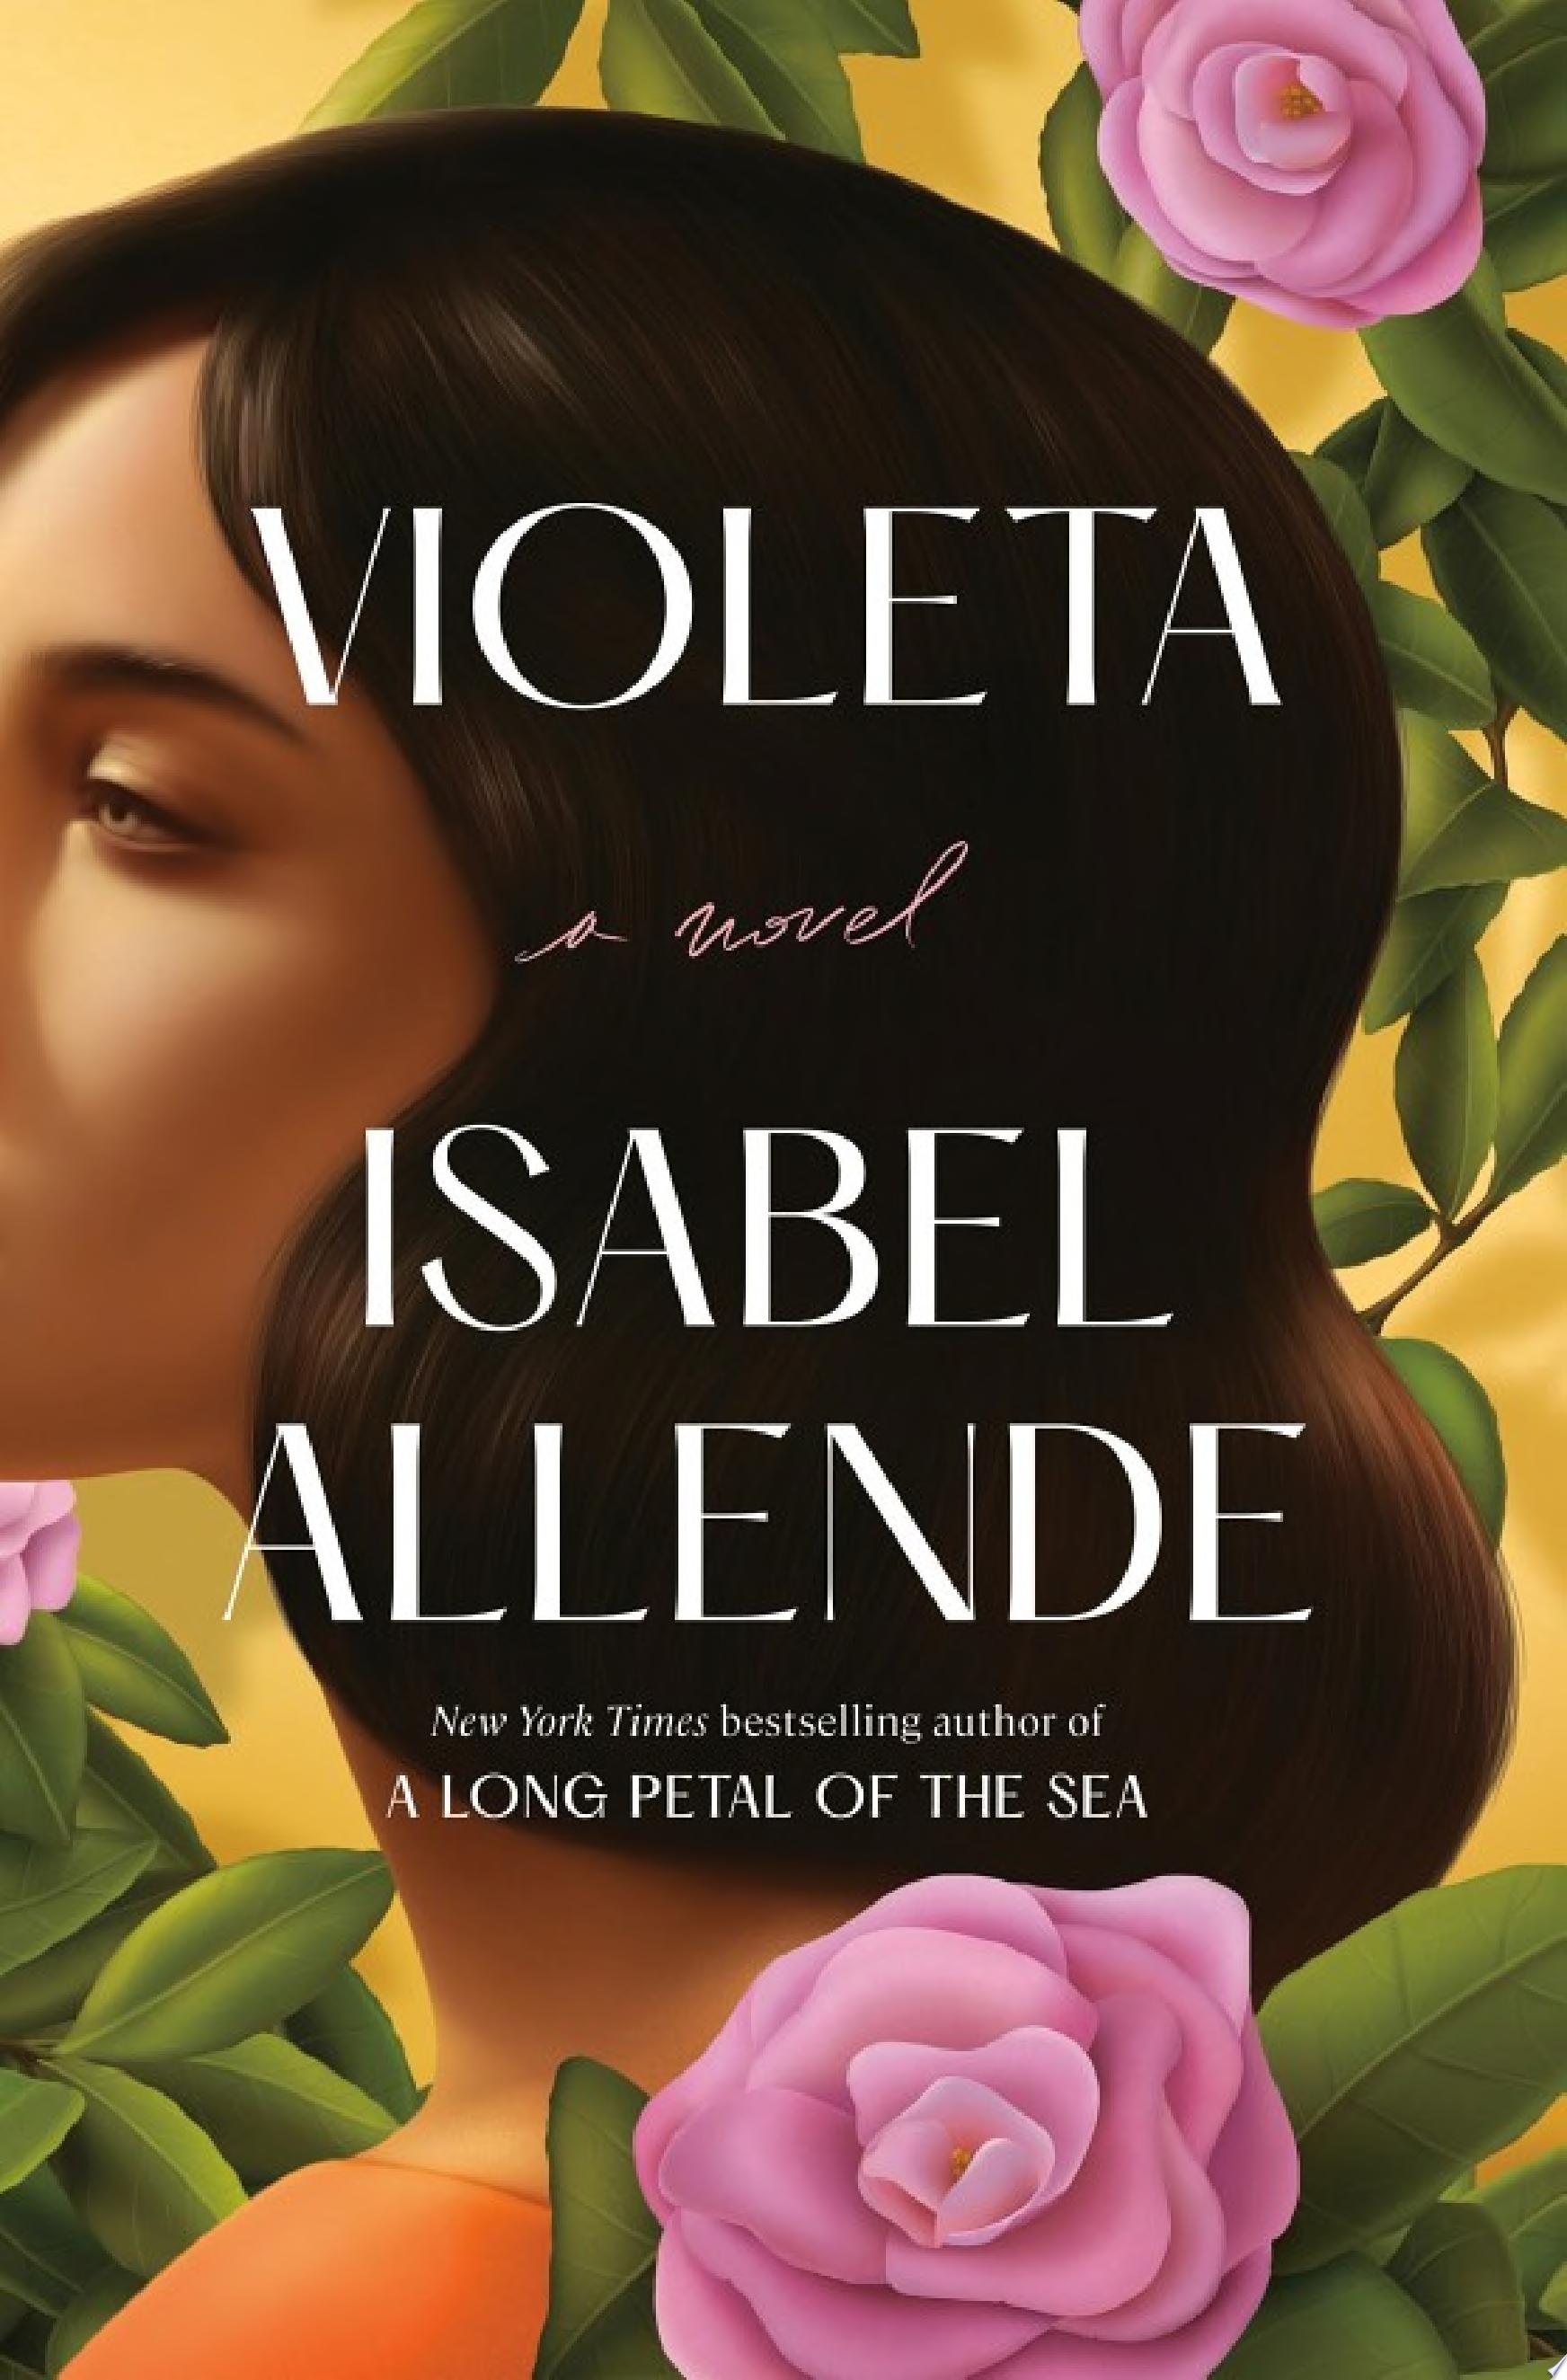 Image for "Violeta"